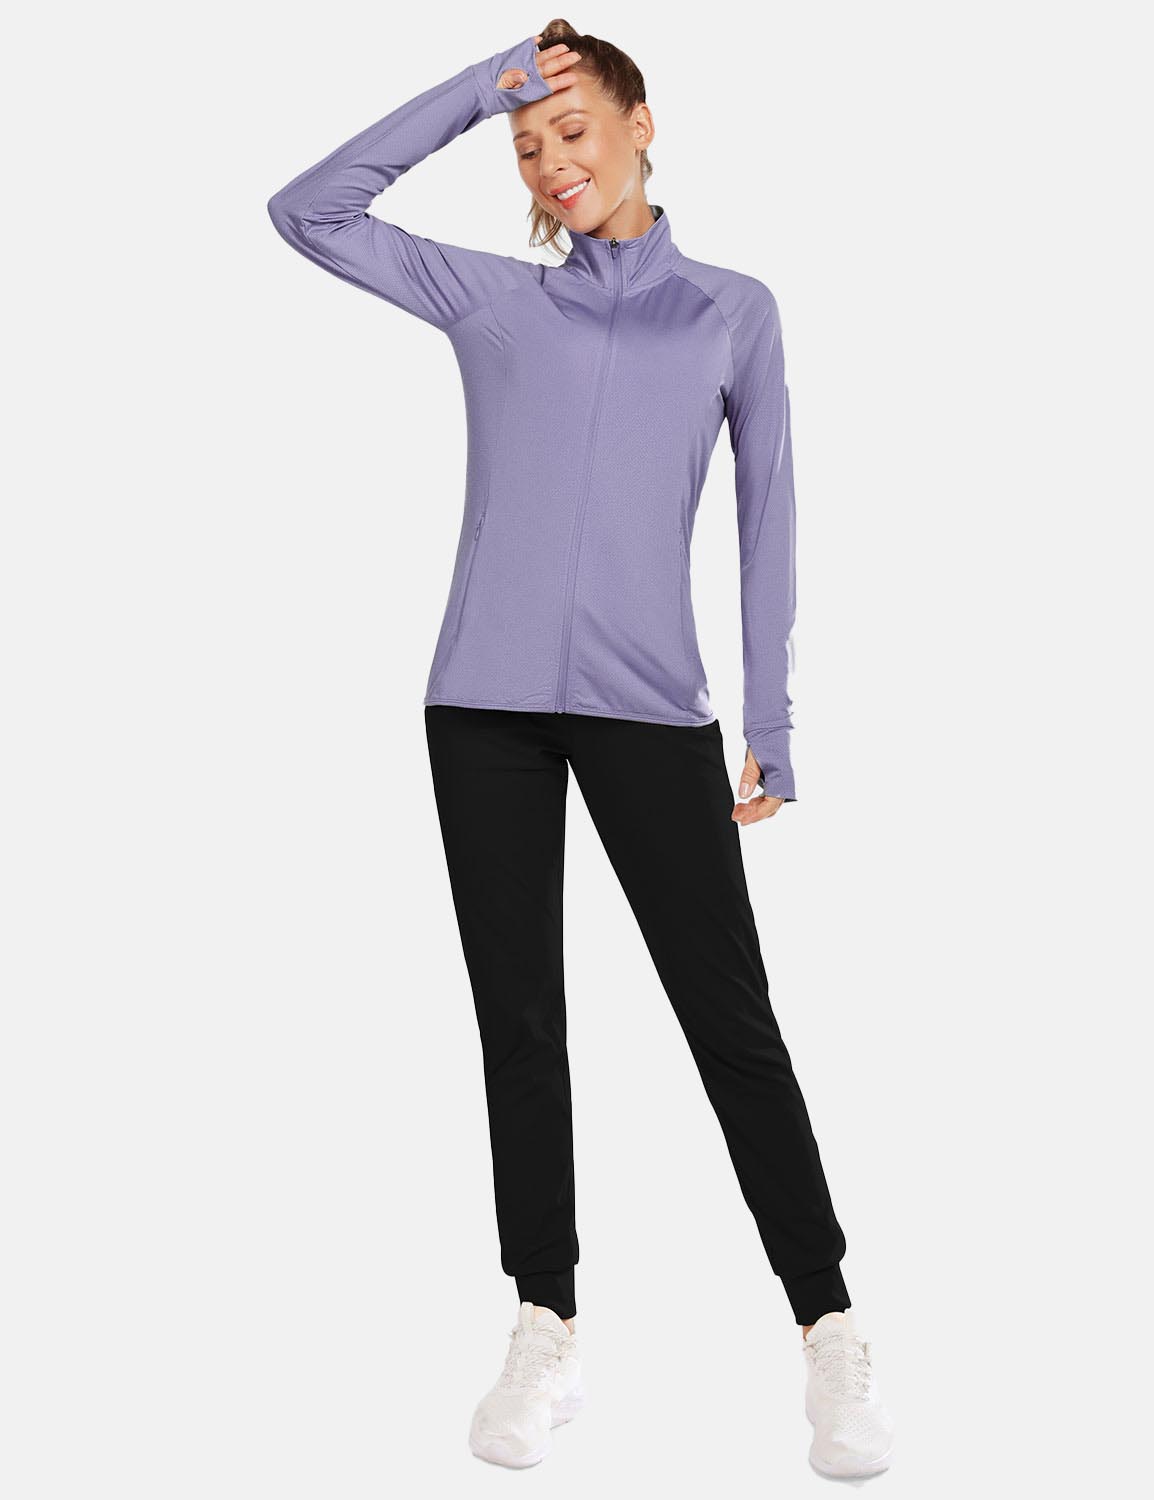 BALEAF Women's UPF 50+ Long Sleeve Zip Pocketed Lightweight Jackets cga018 Lavender Full